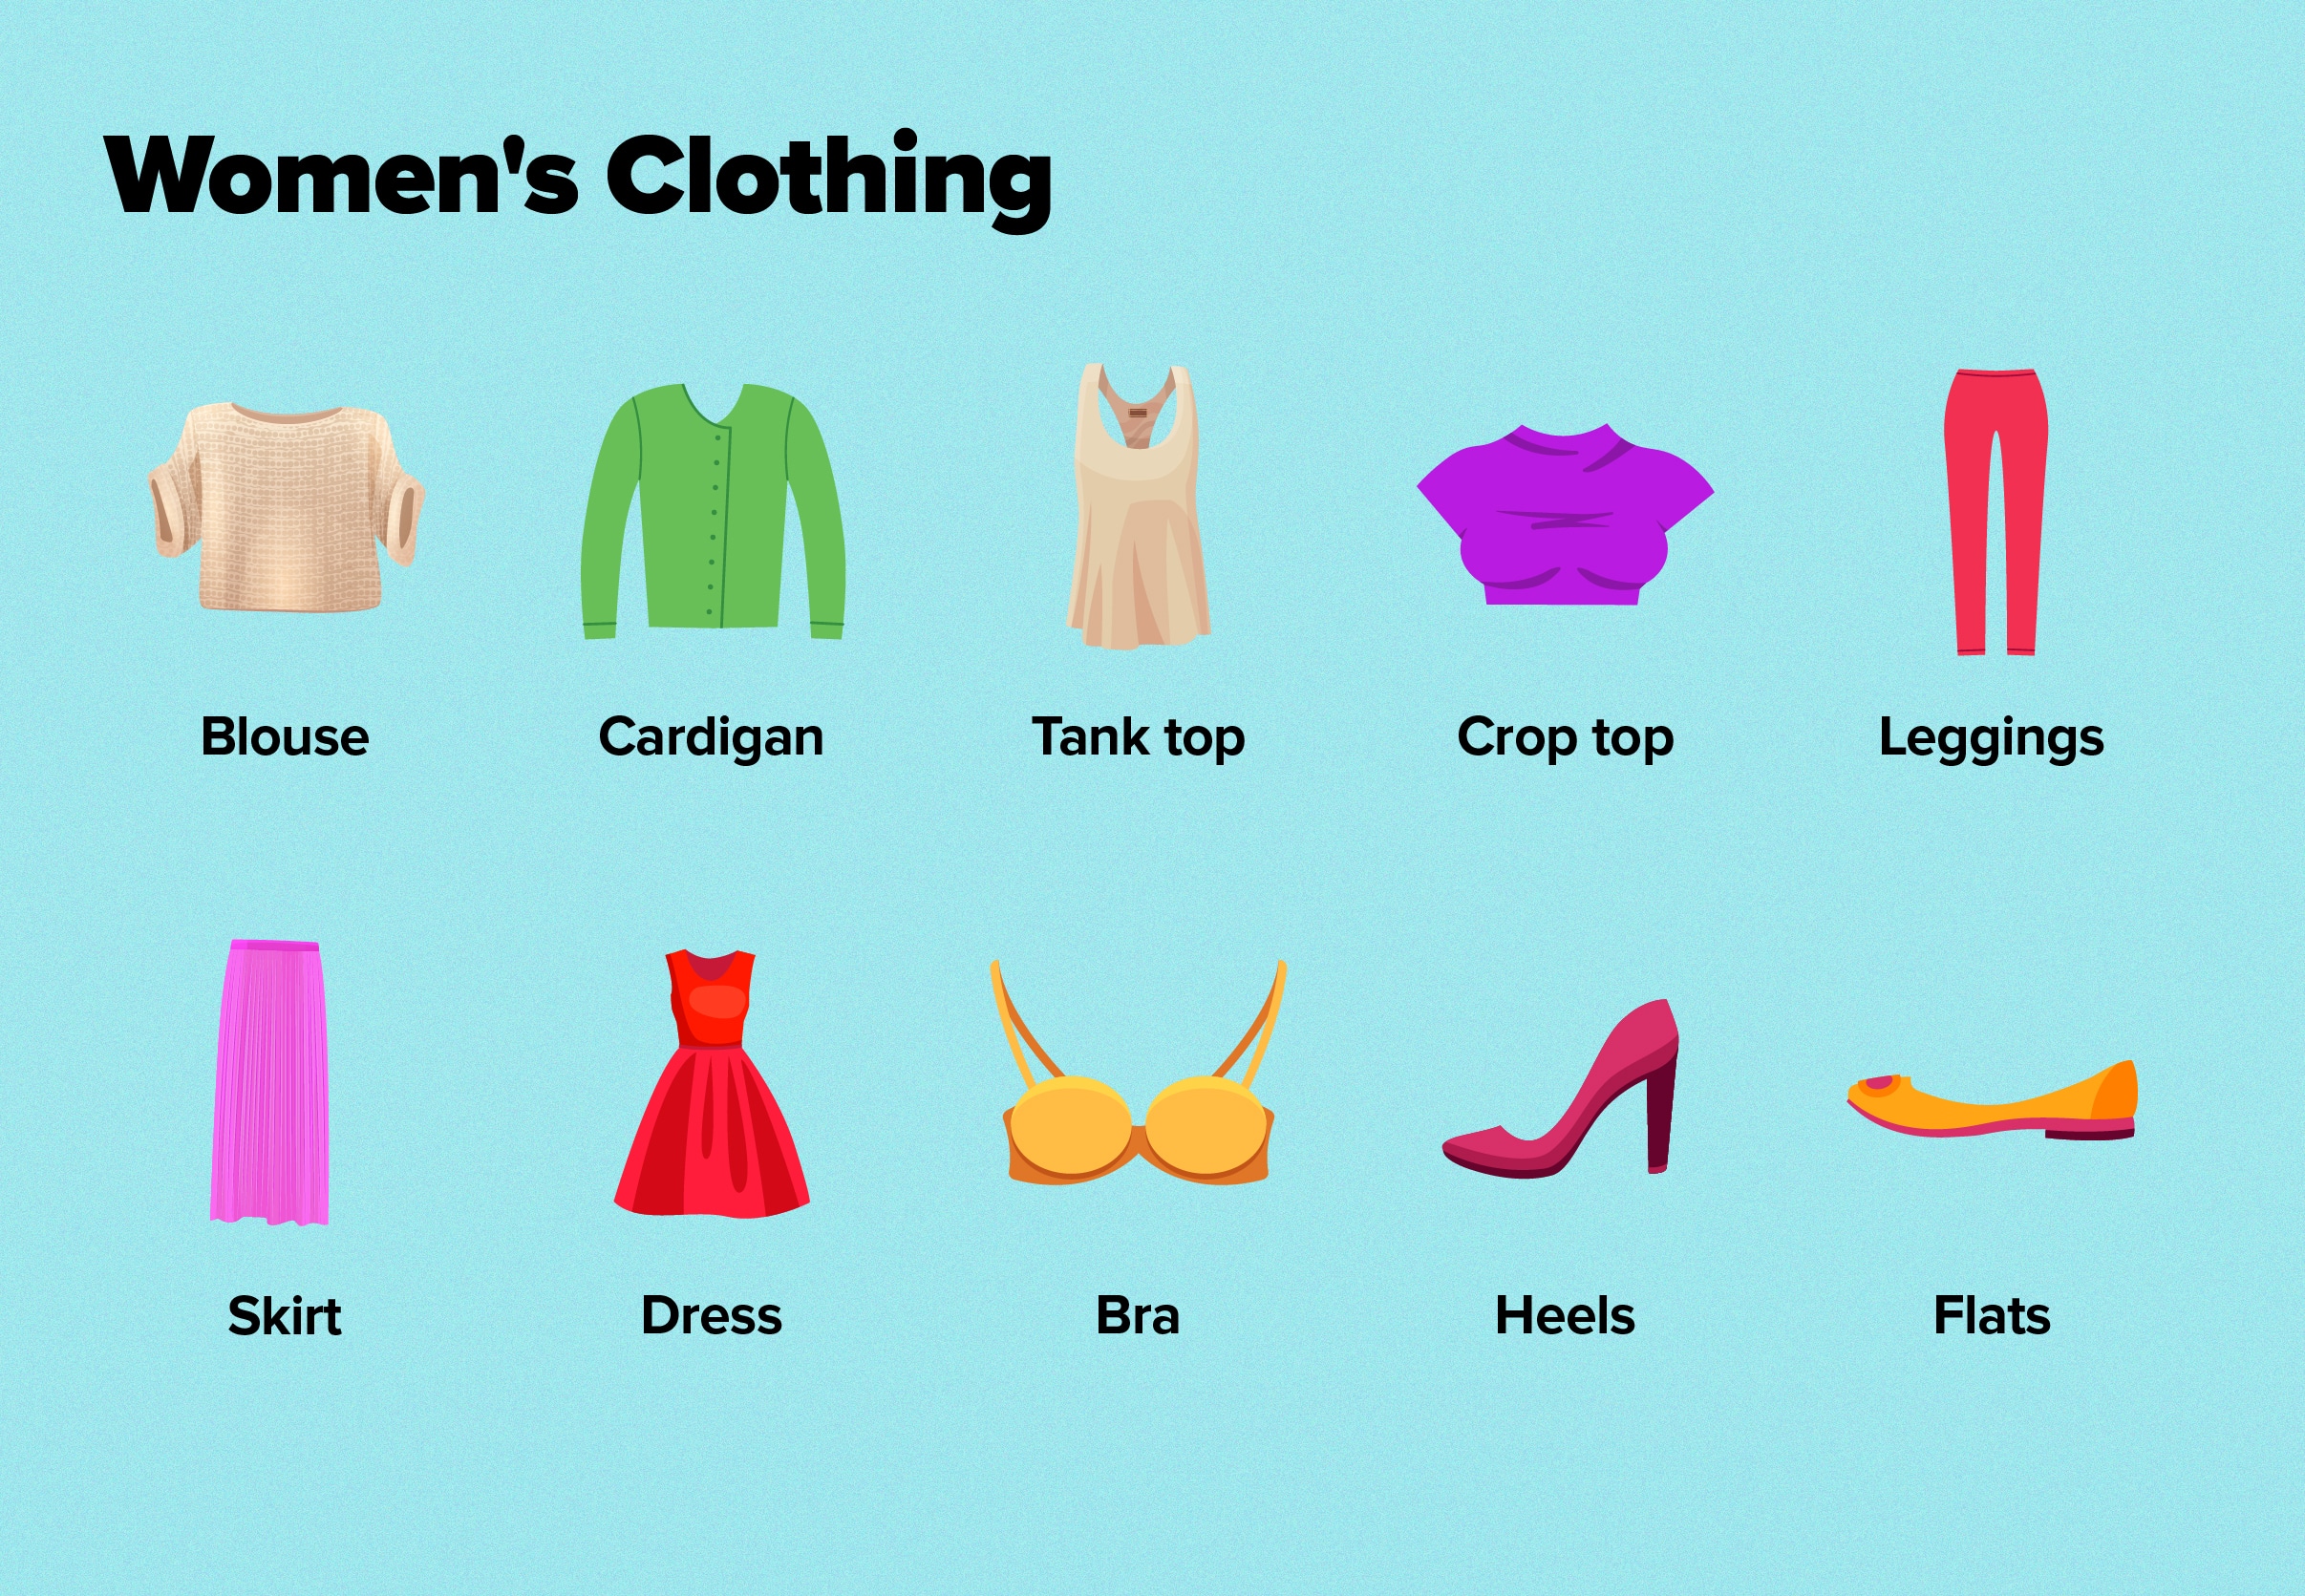 Shenker English Tips - Men's Clothing Vocabulary